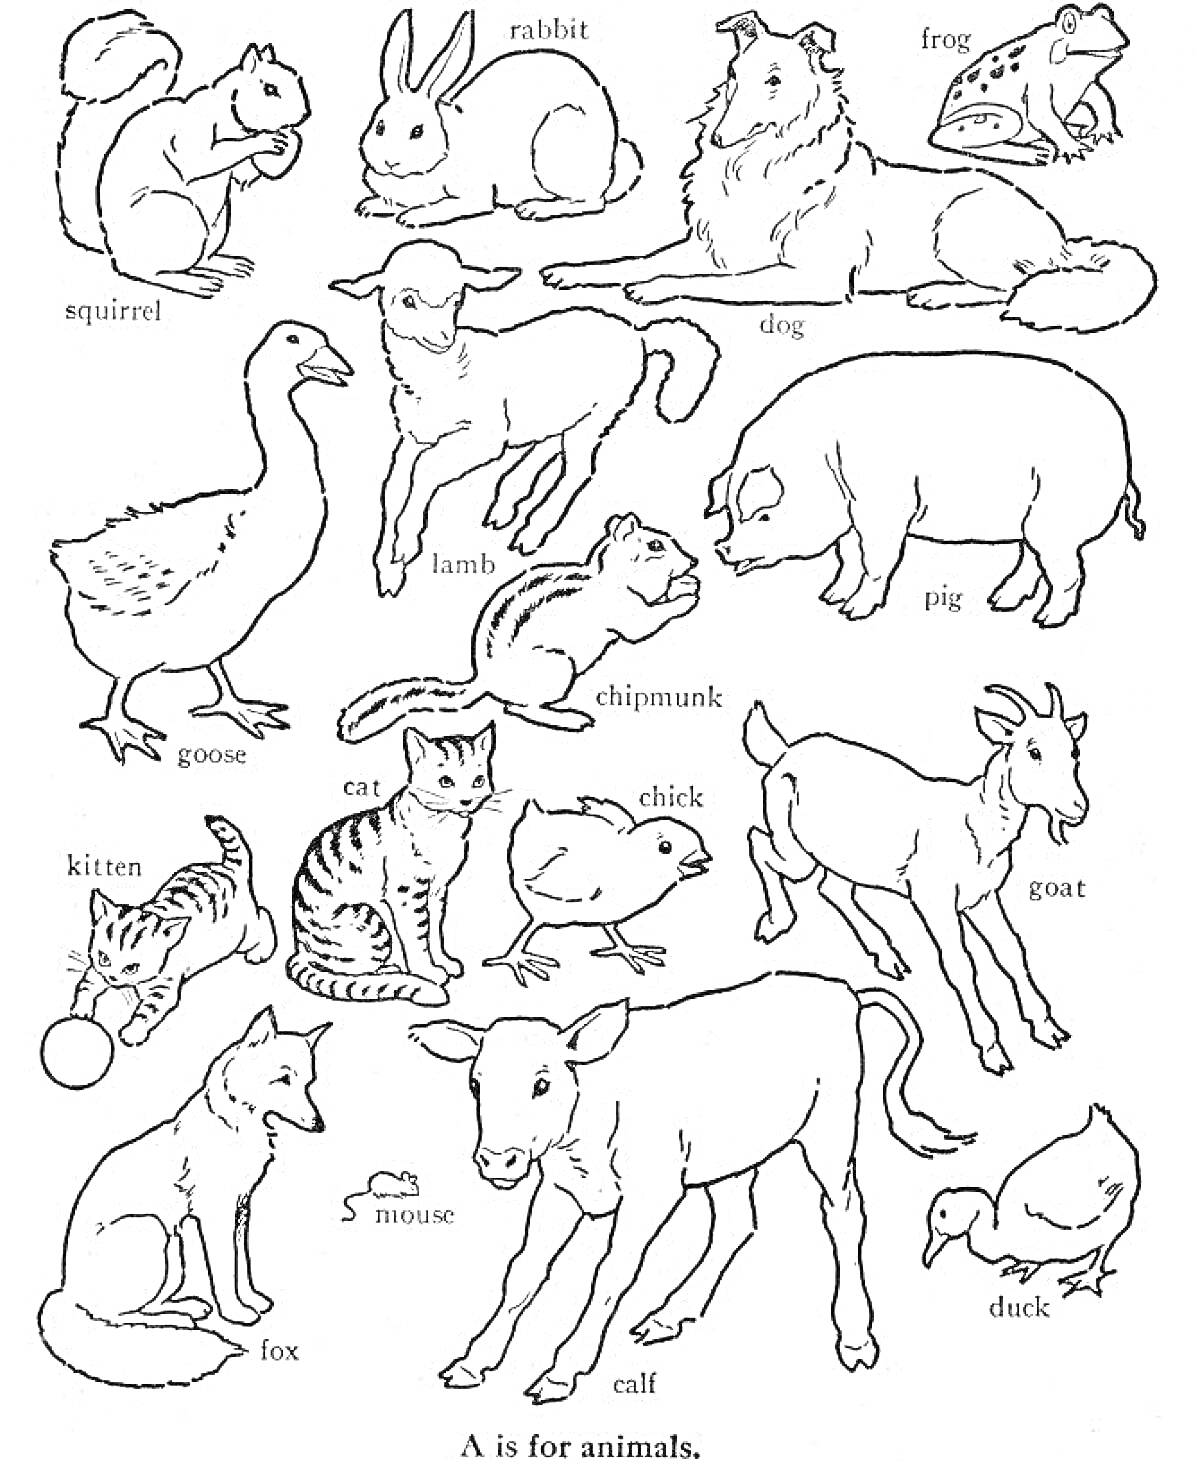 Раскраска Белка, кролик, собака, лягушка, гусь, ягненок, бурундук, свинья, котенок, кошка, цыпленок, коза, лиса, мышь, теленок, утка